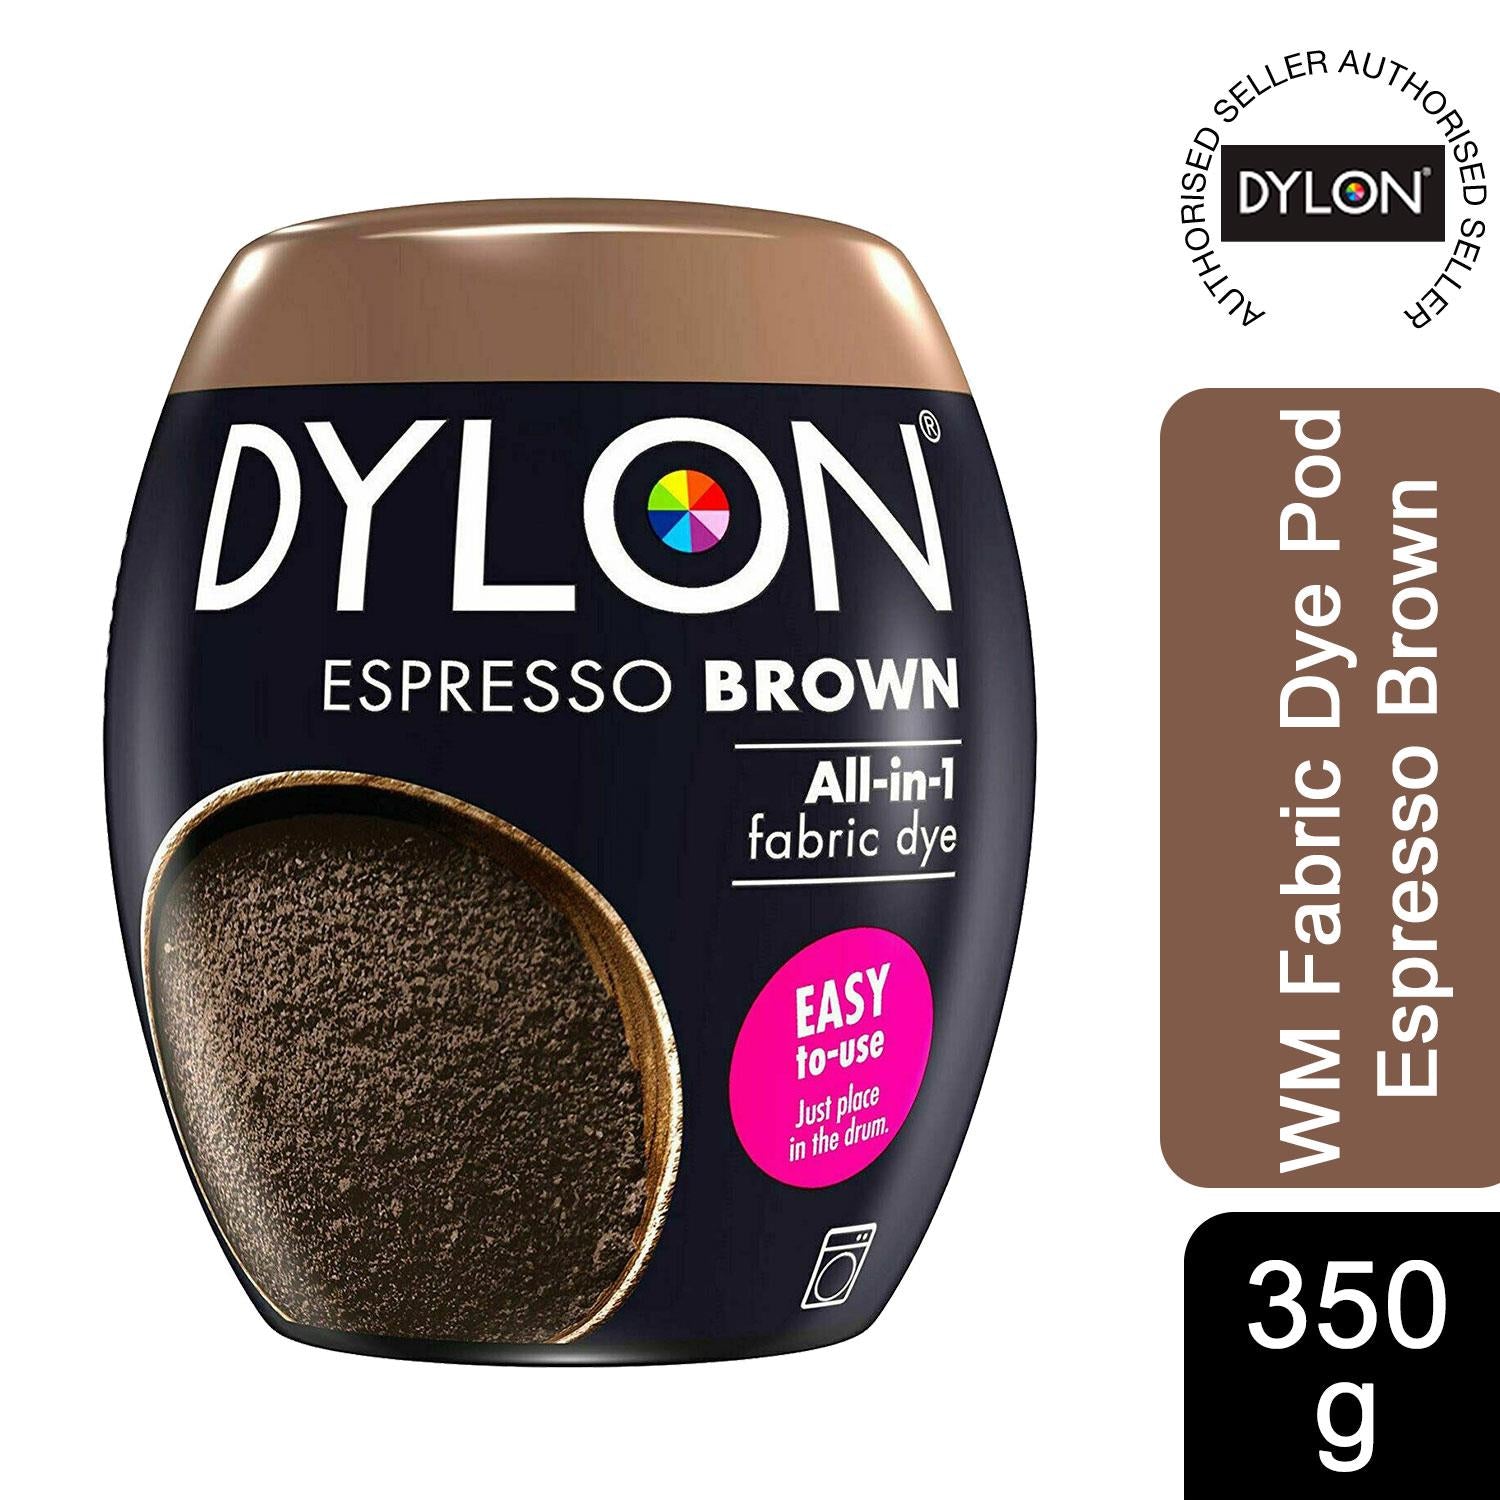 DYLON Washing Machine Fabric Dye Pod, Espresso Brown, 1pk of 350g